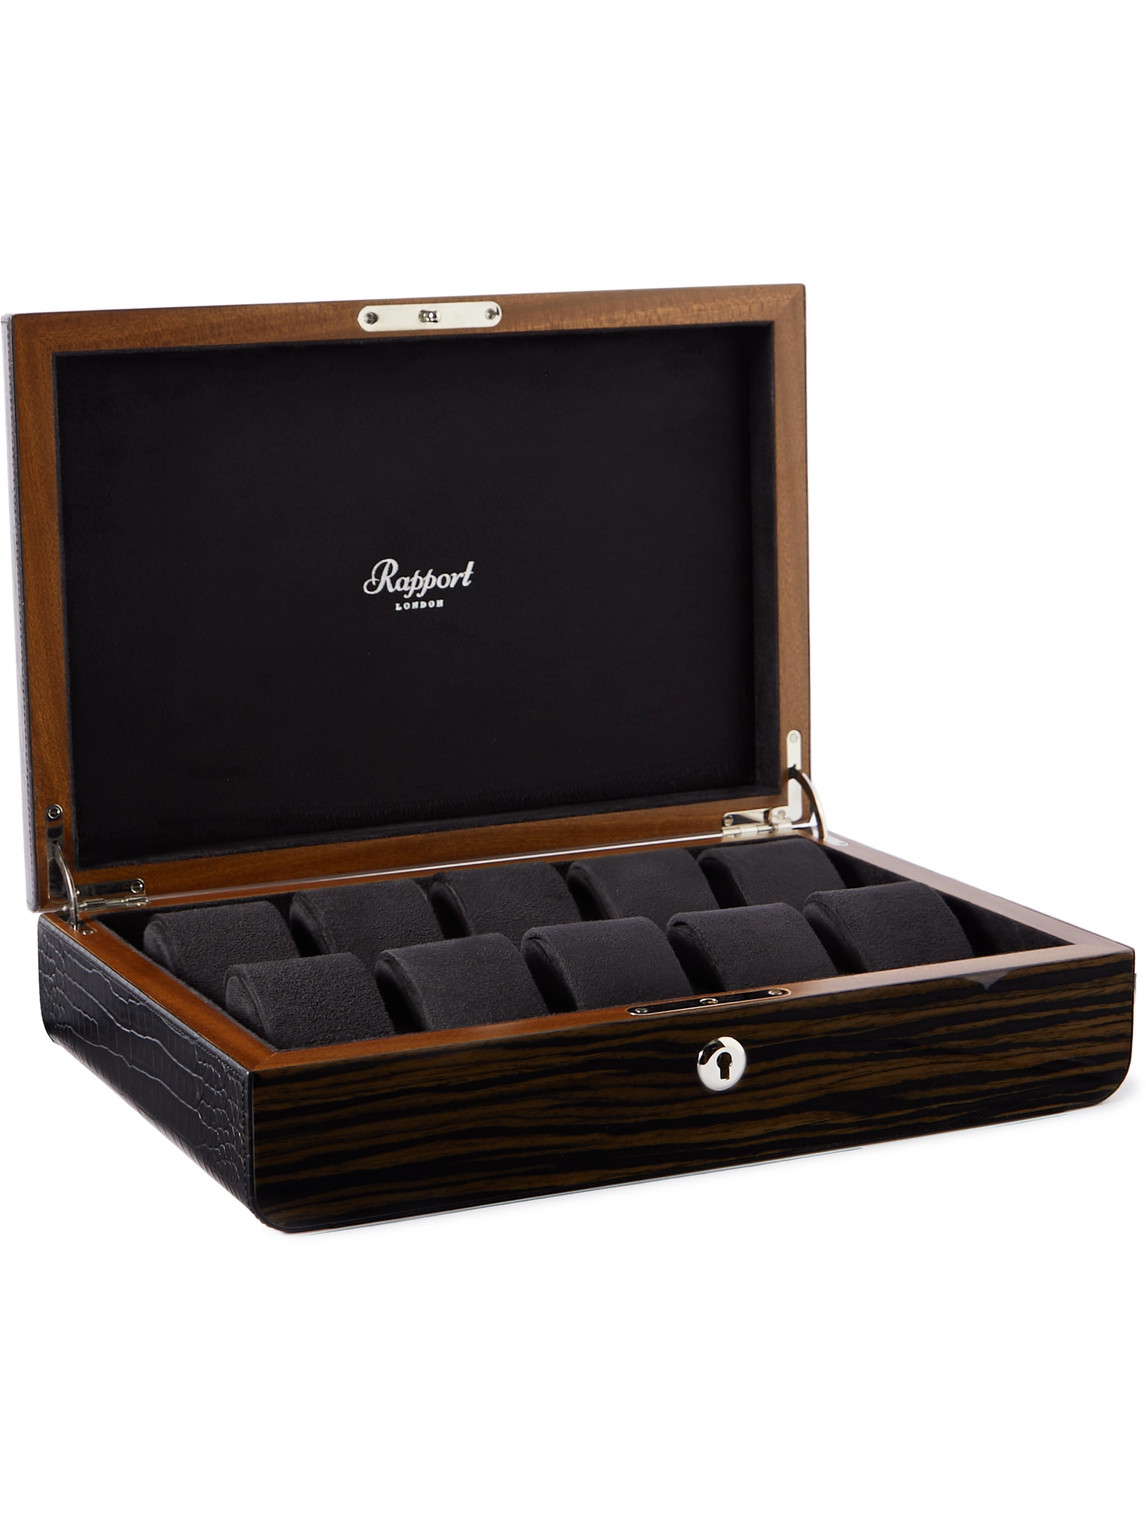 Rapport London Mayfair Wood 10-piece Watch Box In Brown